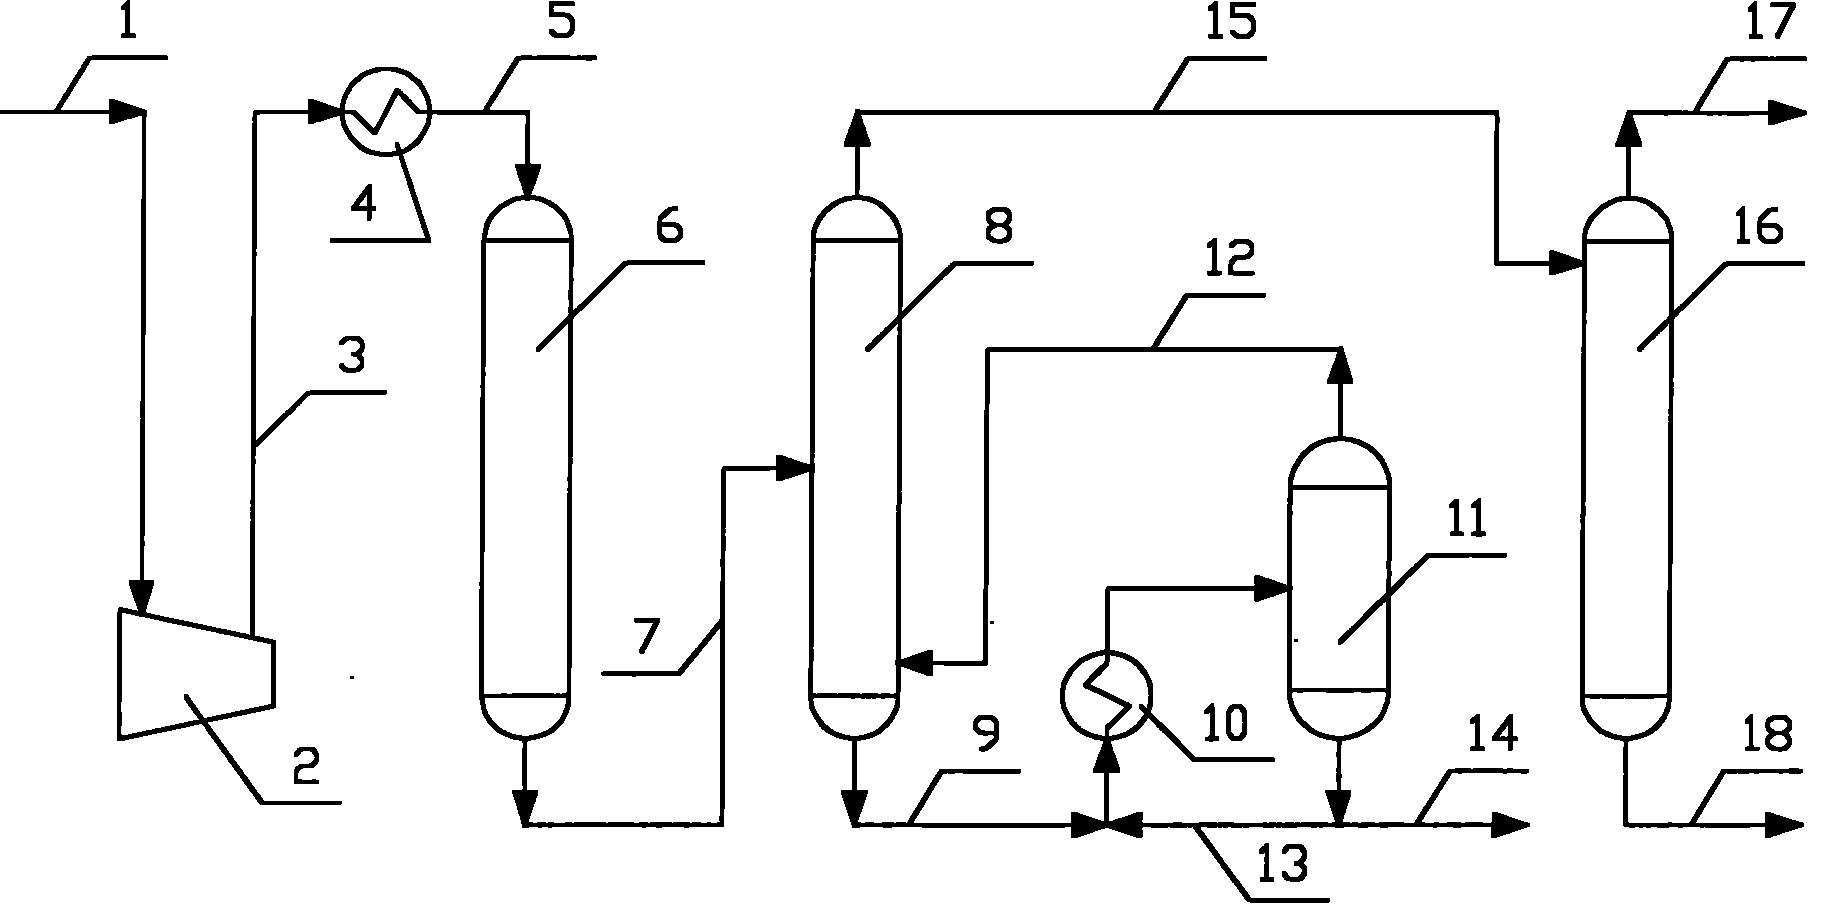 Ethylene separation method